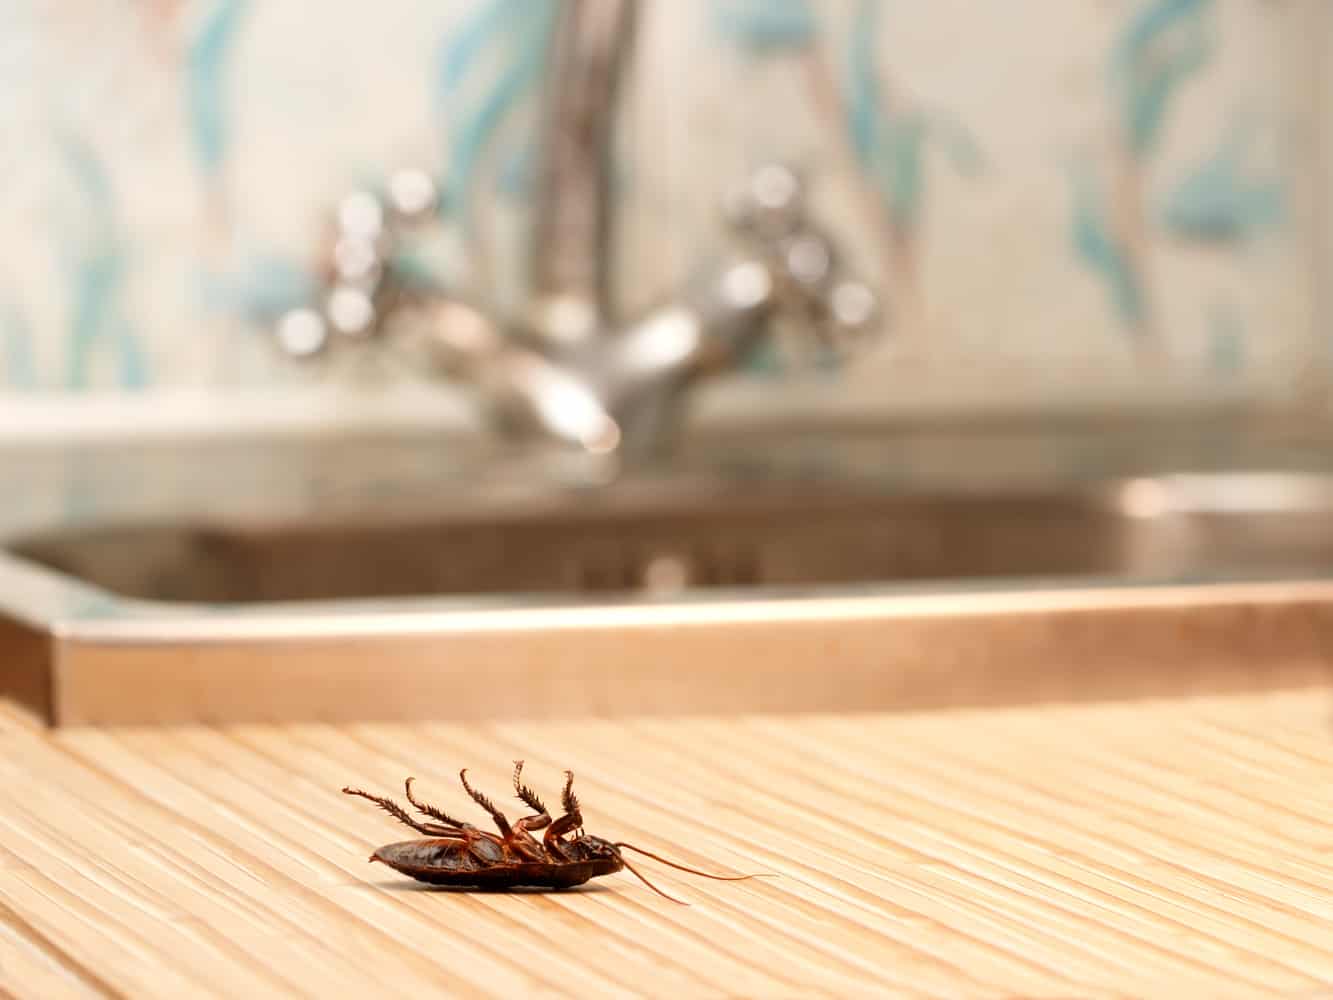 Does Bleach Kill Roaches? - PestProper.com